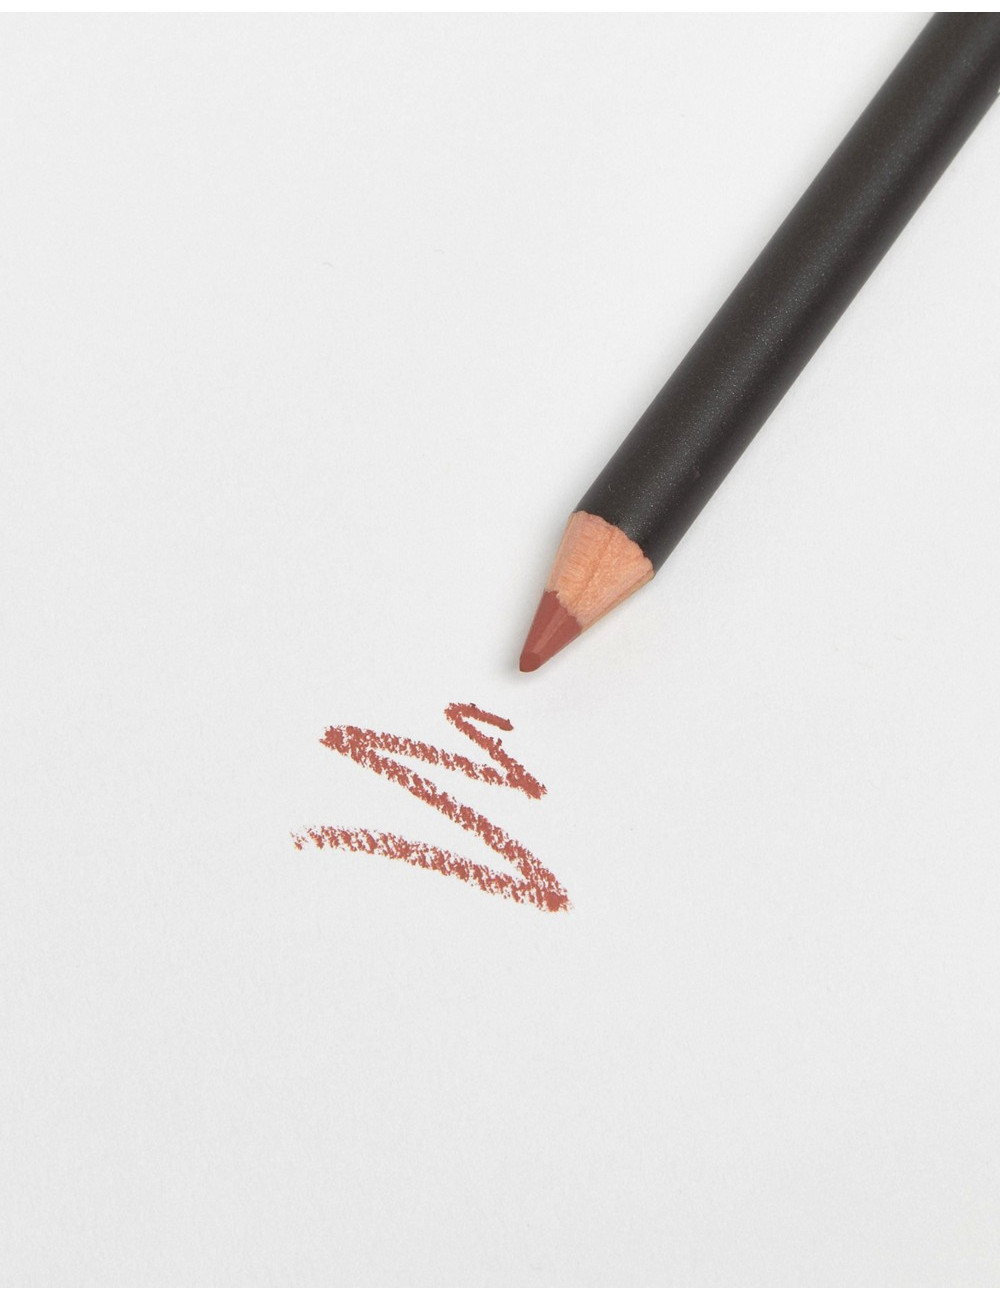 MAC Lip Pencil - Boldly Bare